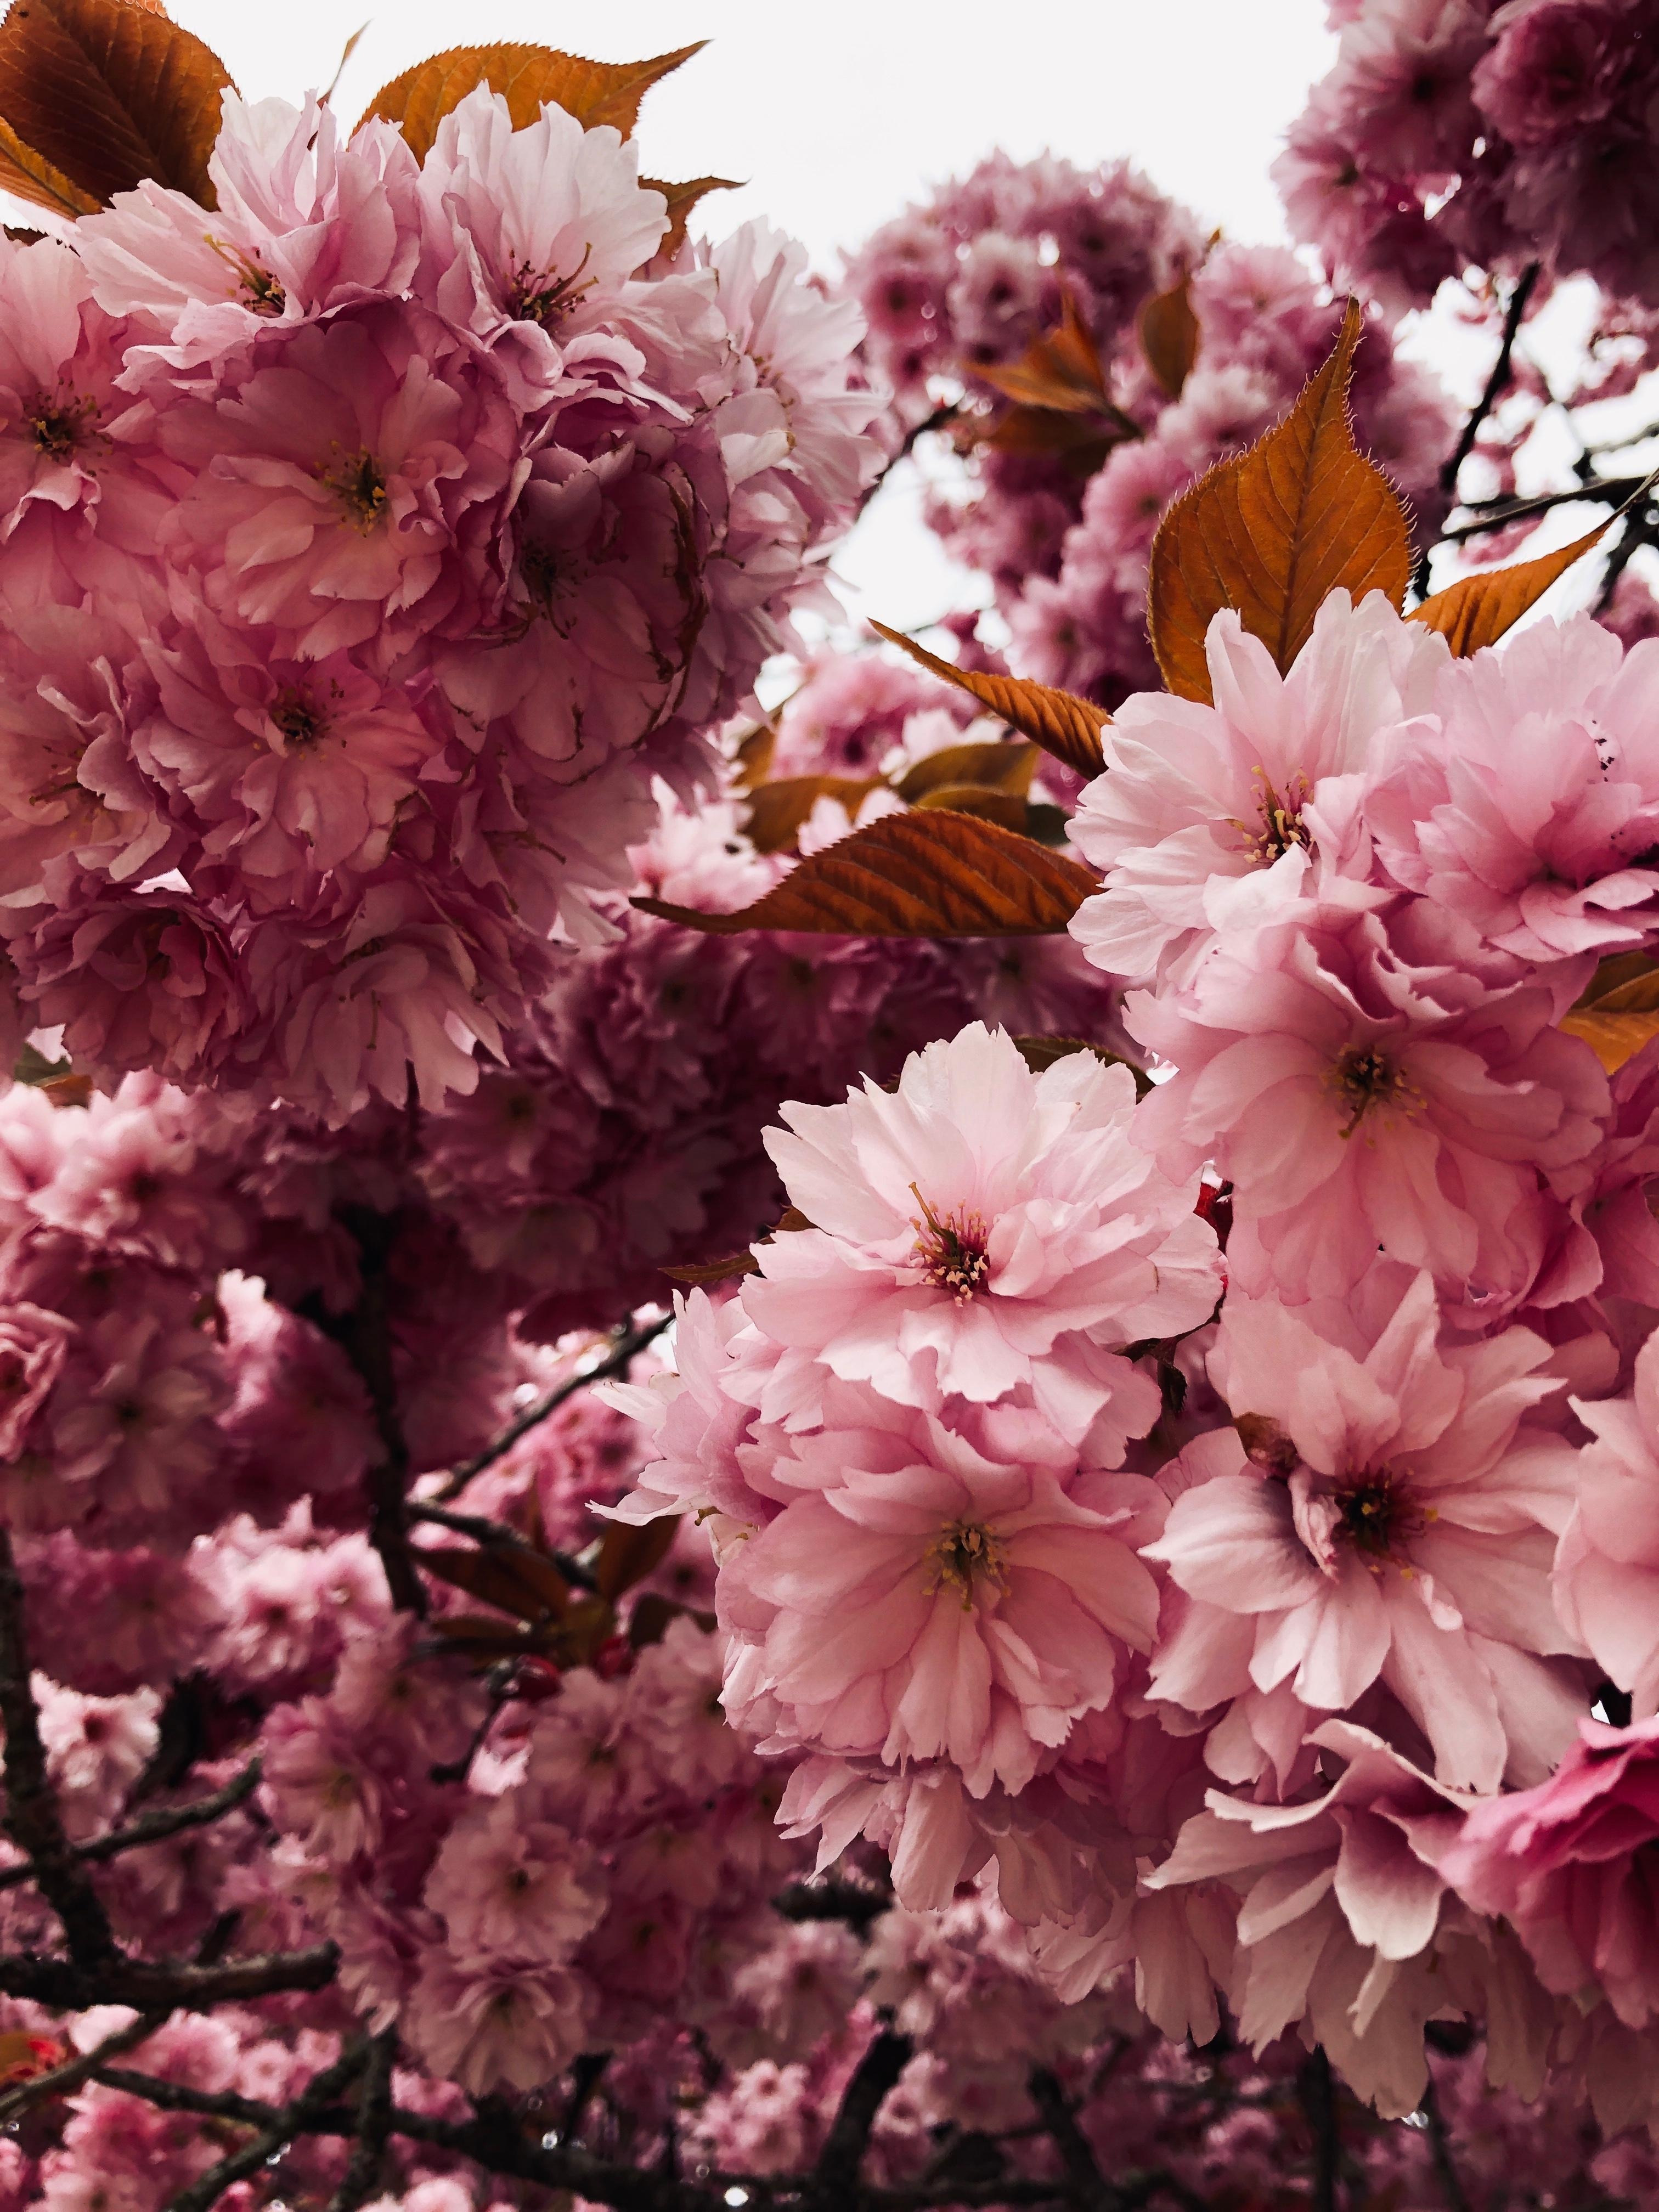 La vie en rose. 
#spring #blossom #natureatitsbest